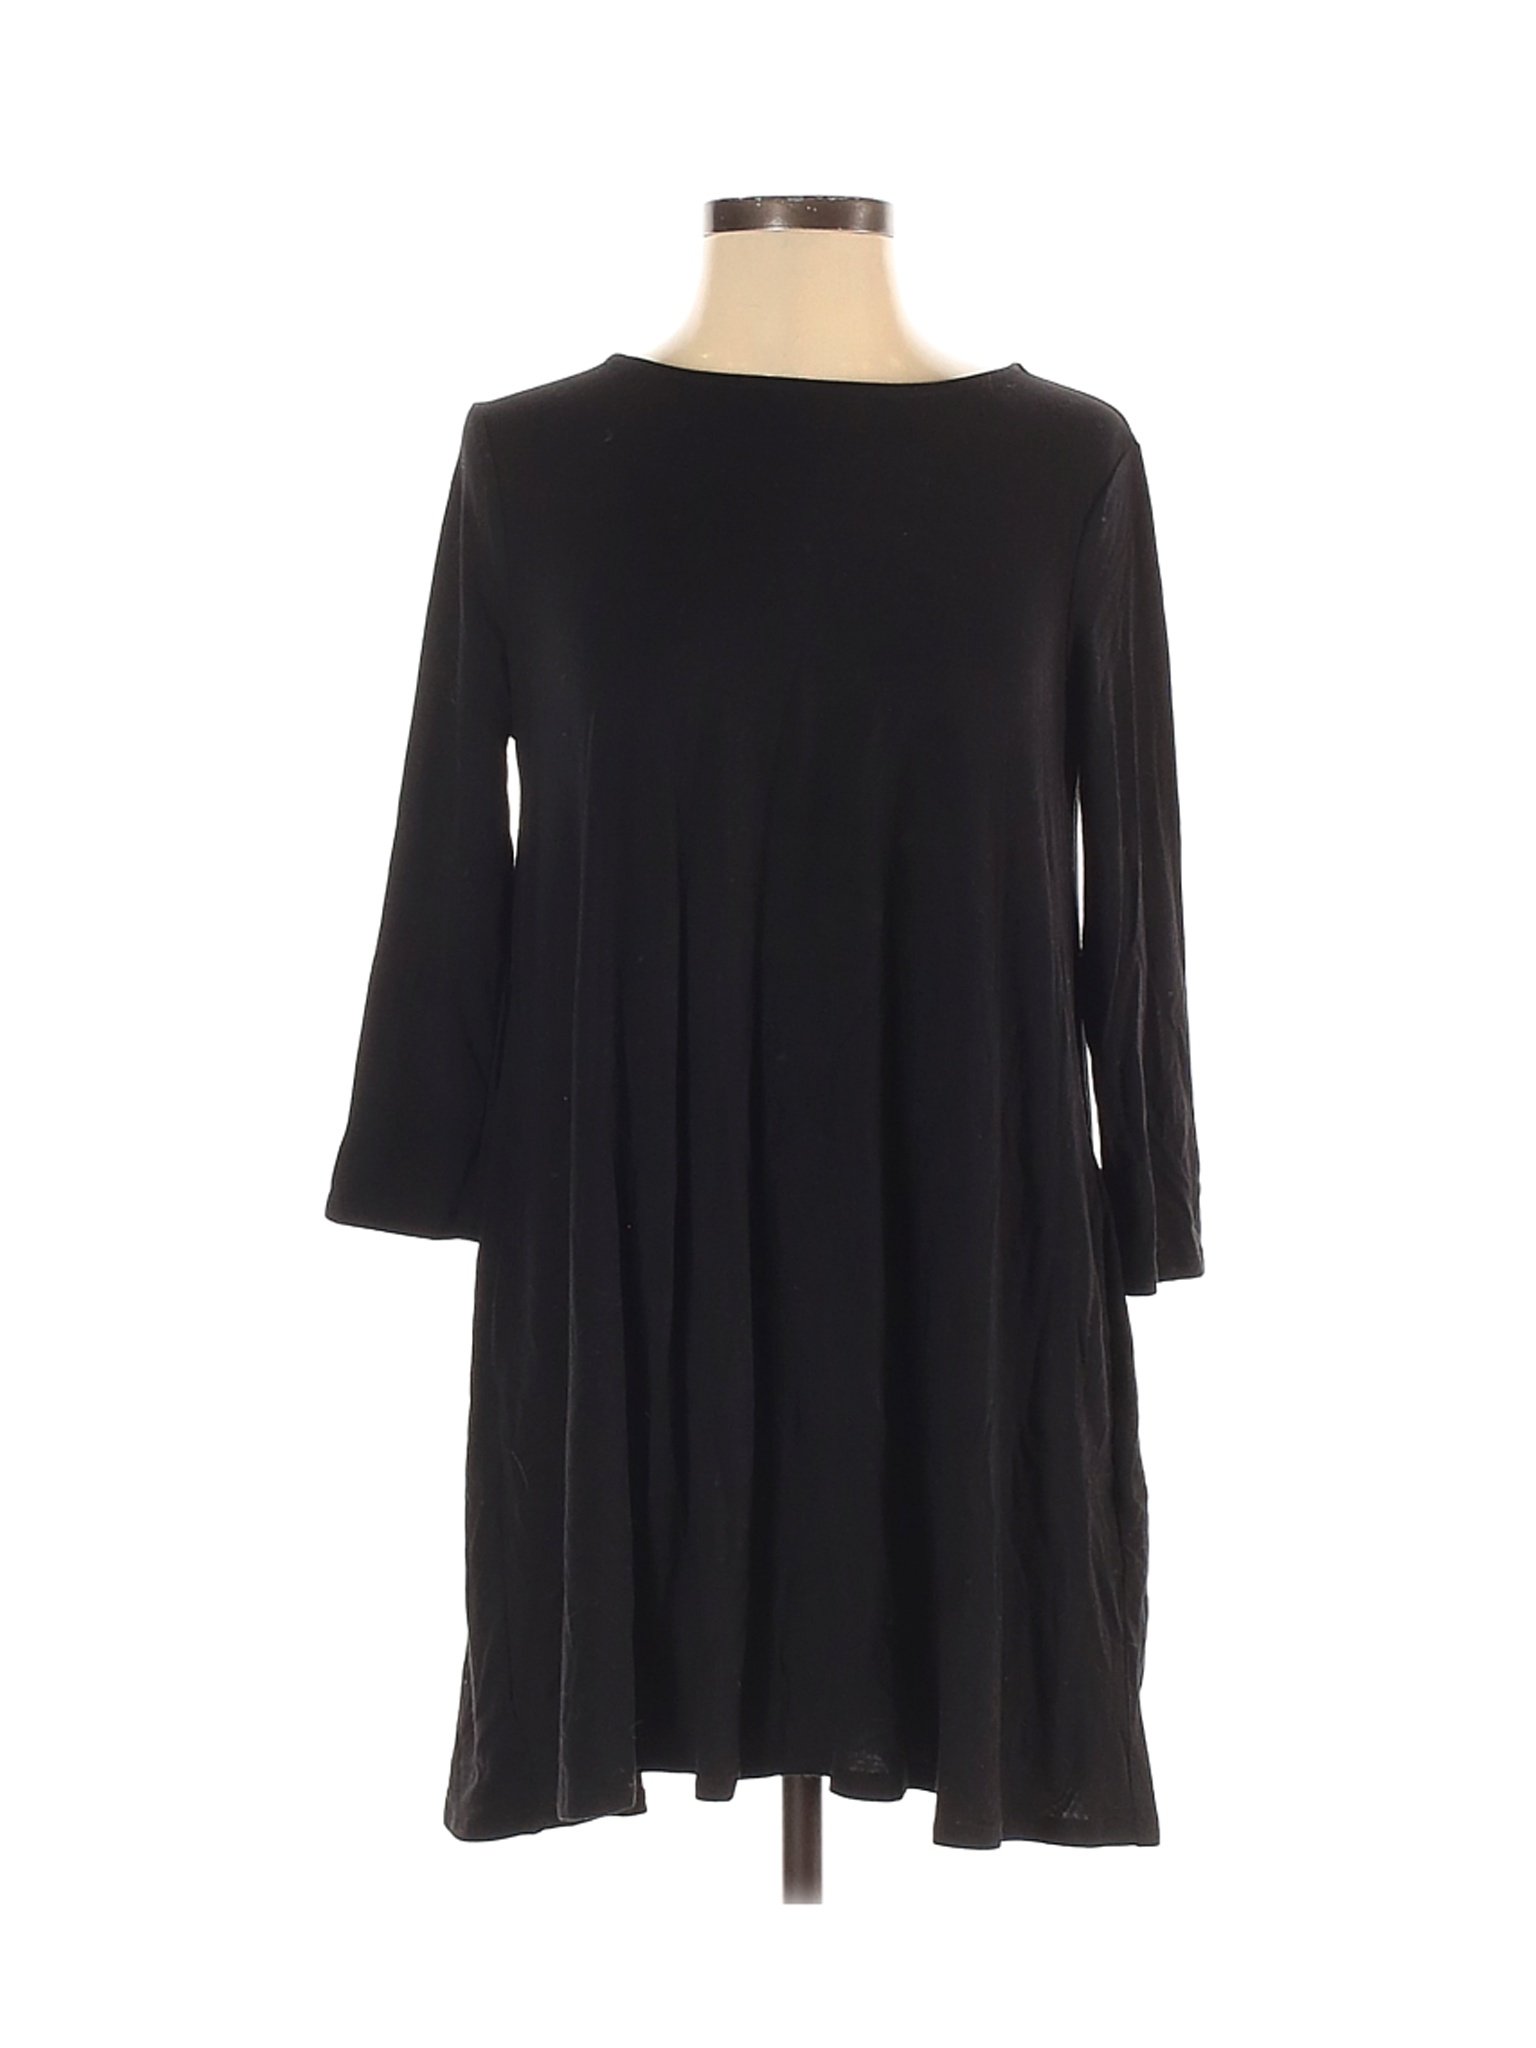 Zenana Premium Women Black Casual Dress S | eBay